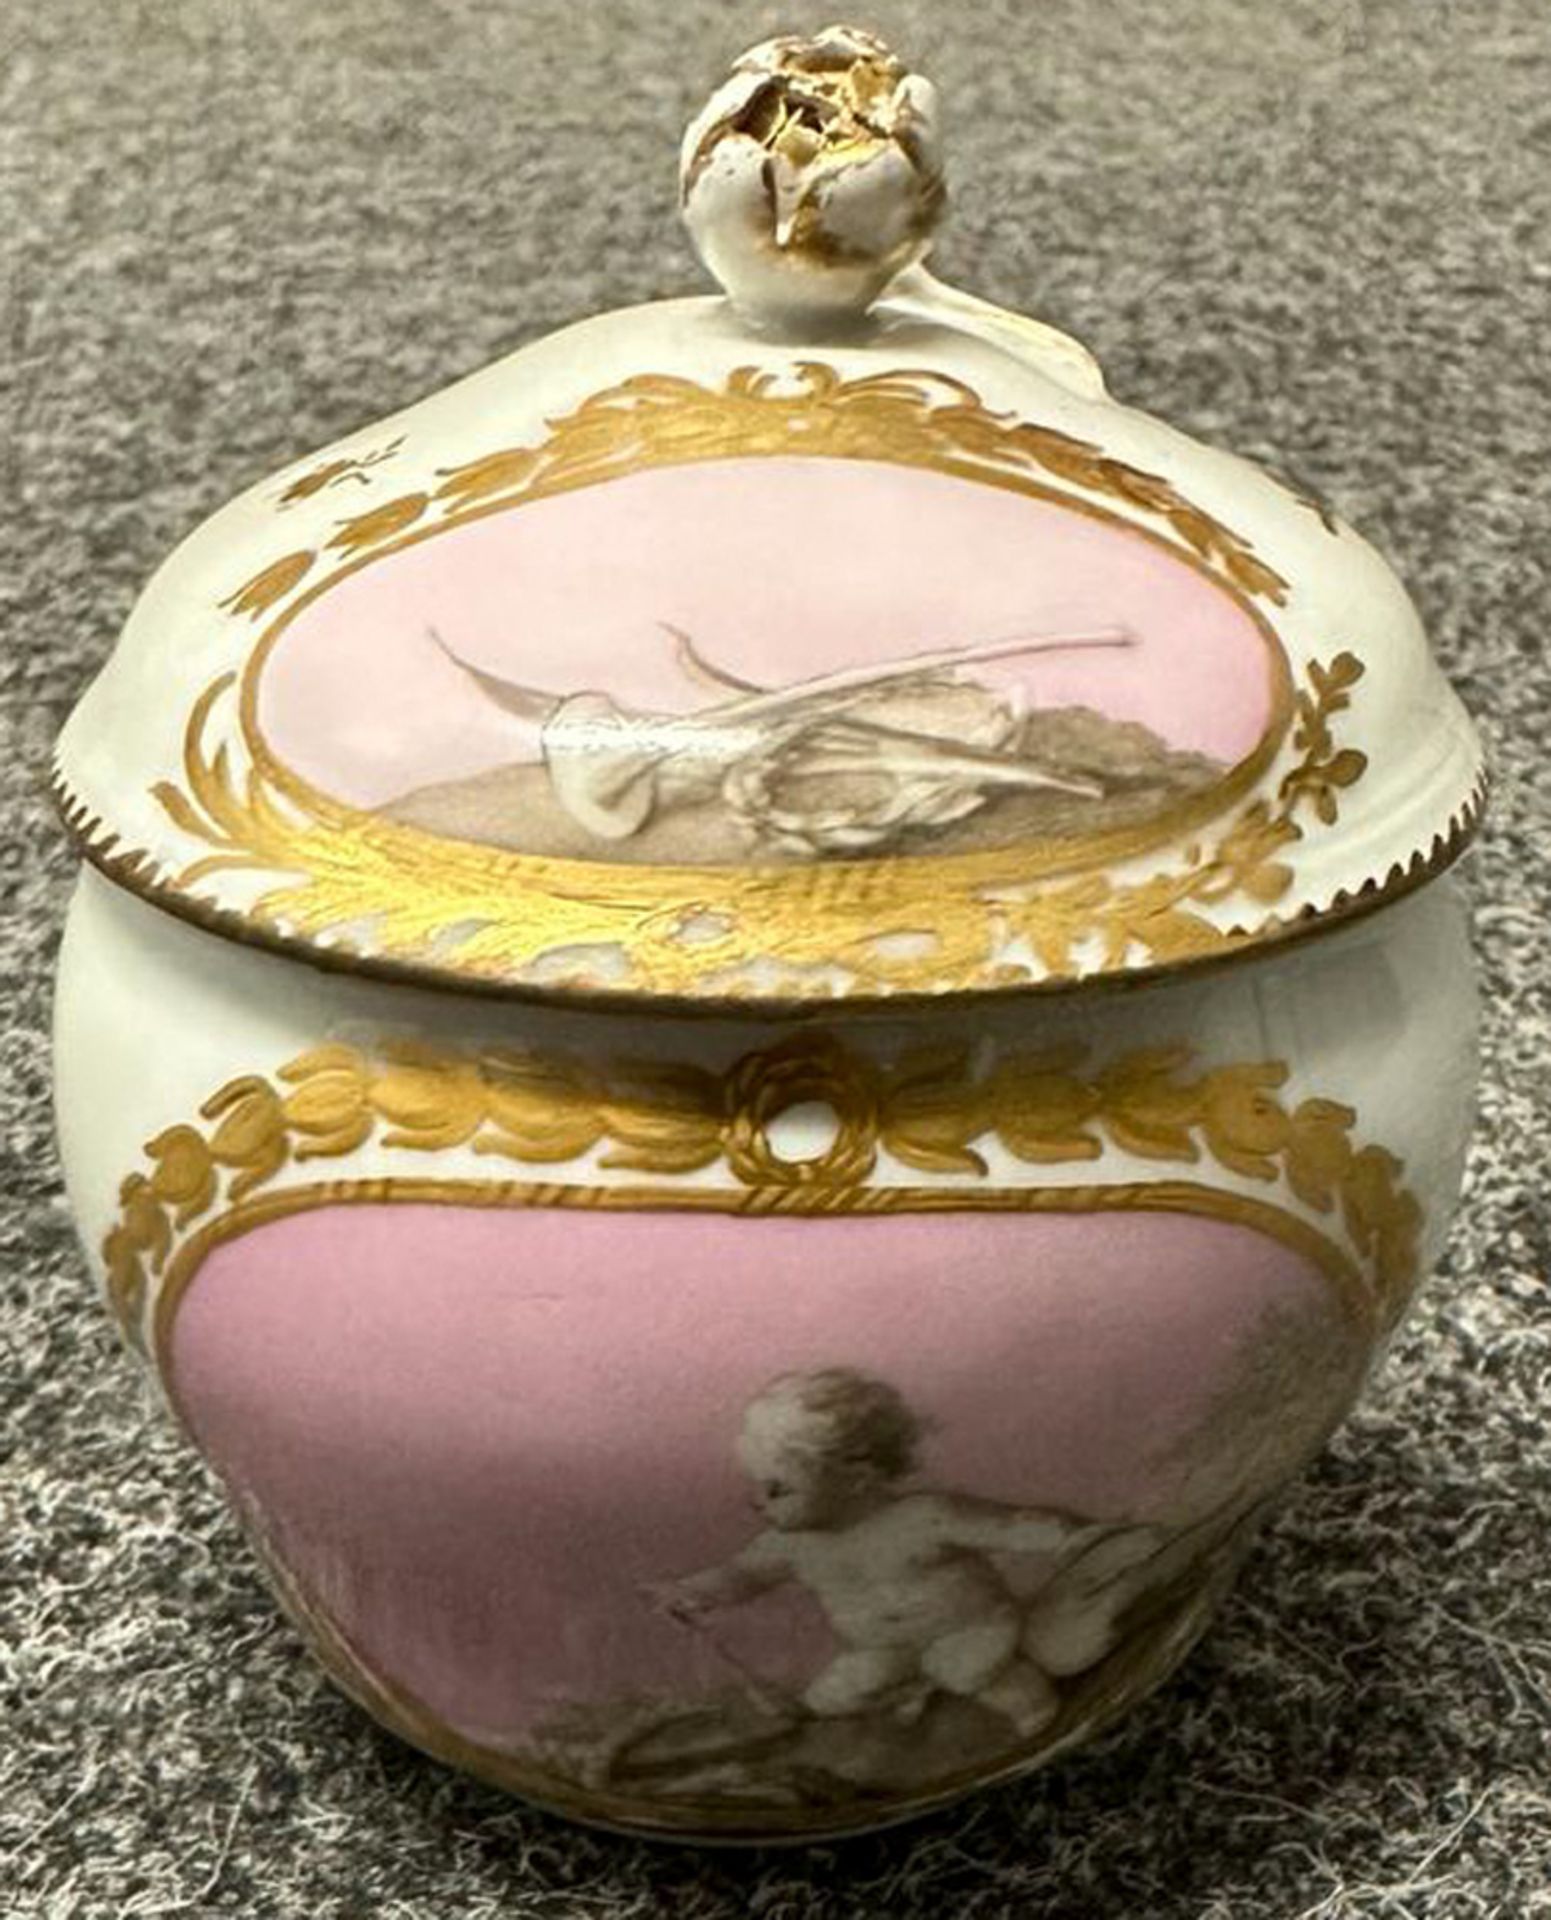 Achttlgs. Reiseservice im Koffer. Meissen 1763-73. Porzellan, auf rosafarbenem Fonds graucamaieu - Image 15 of 34